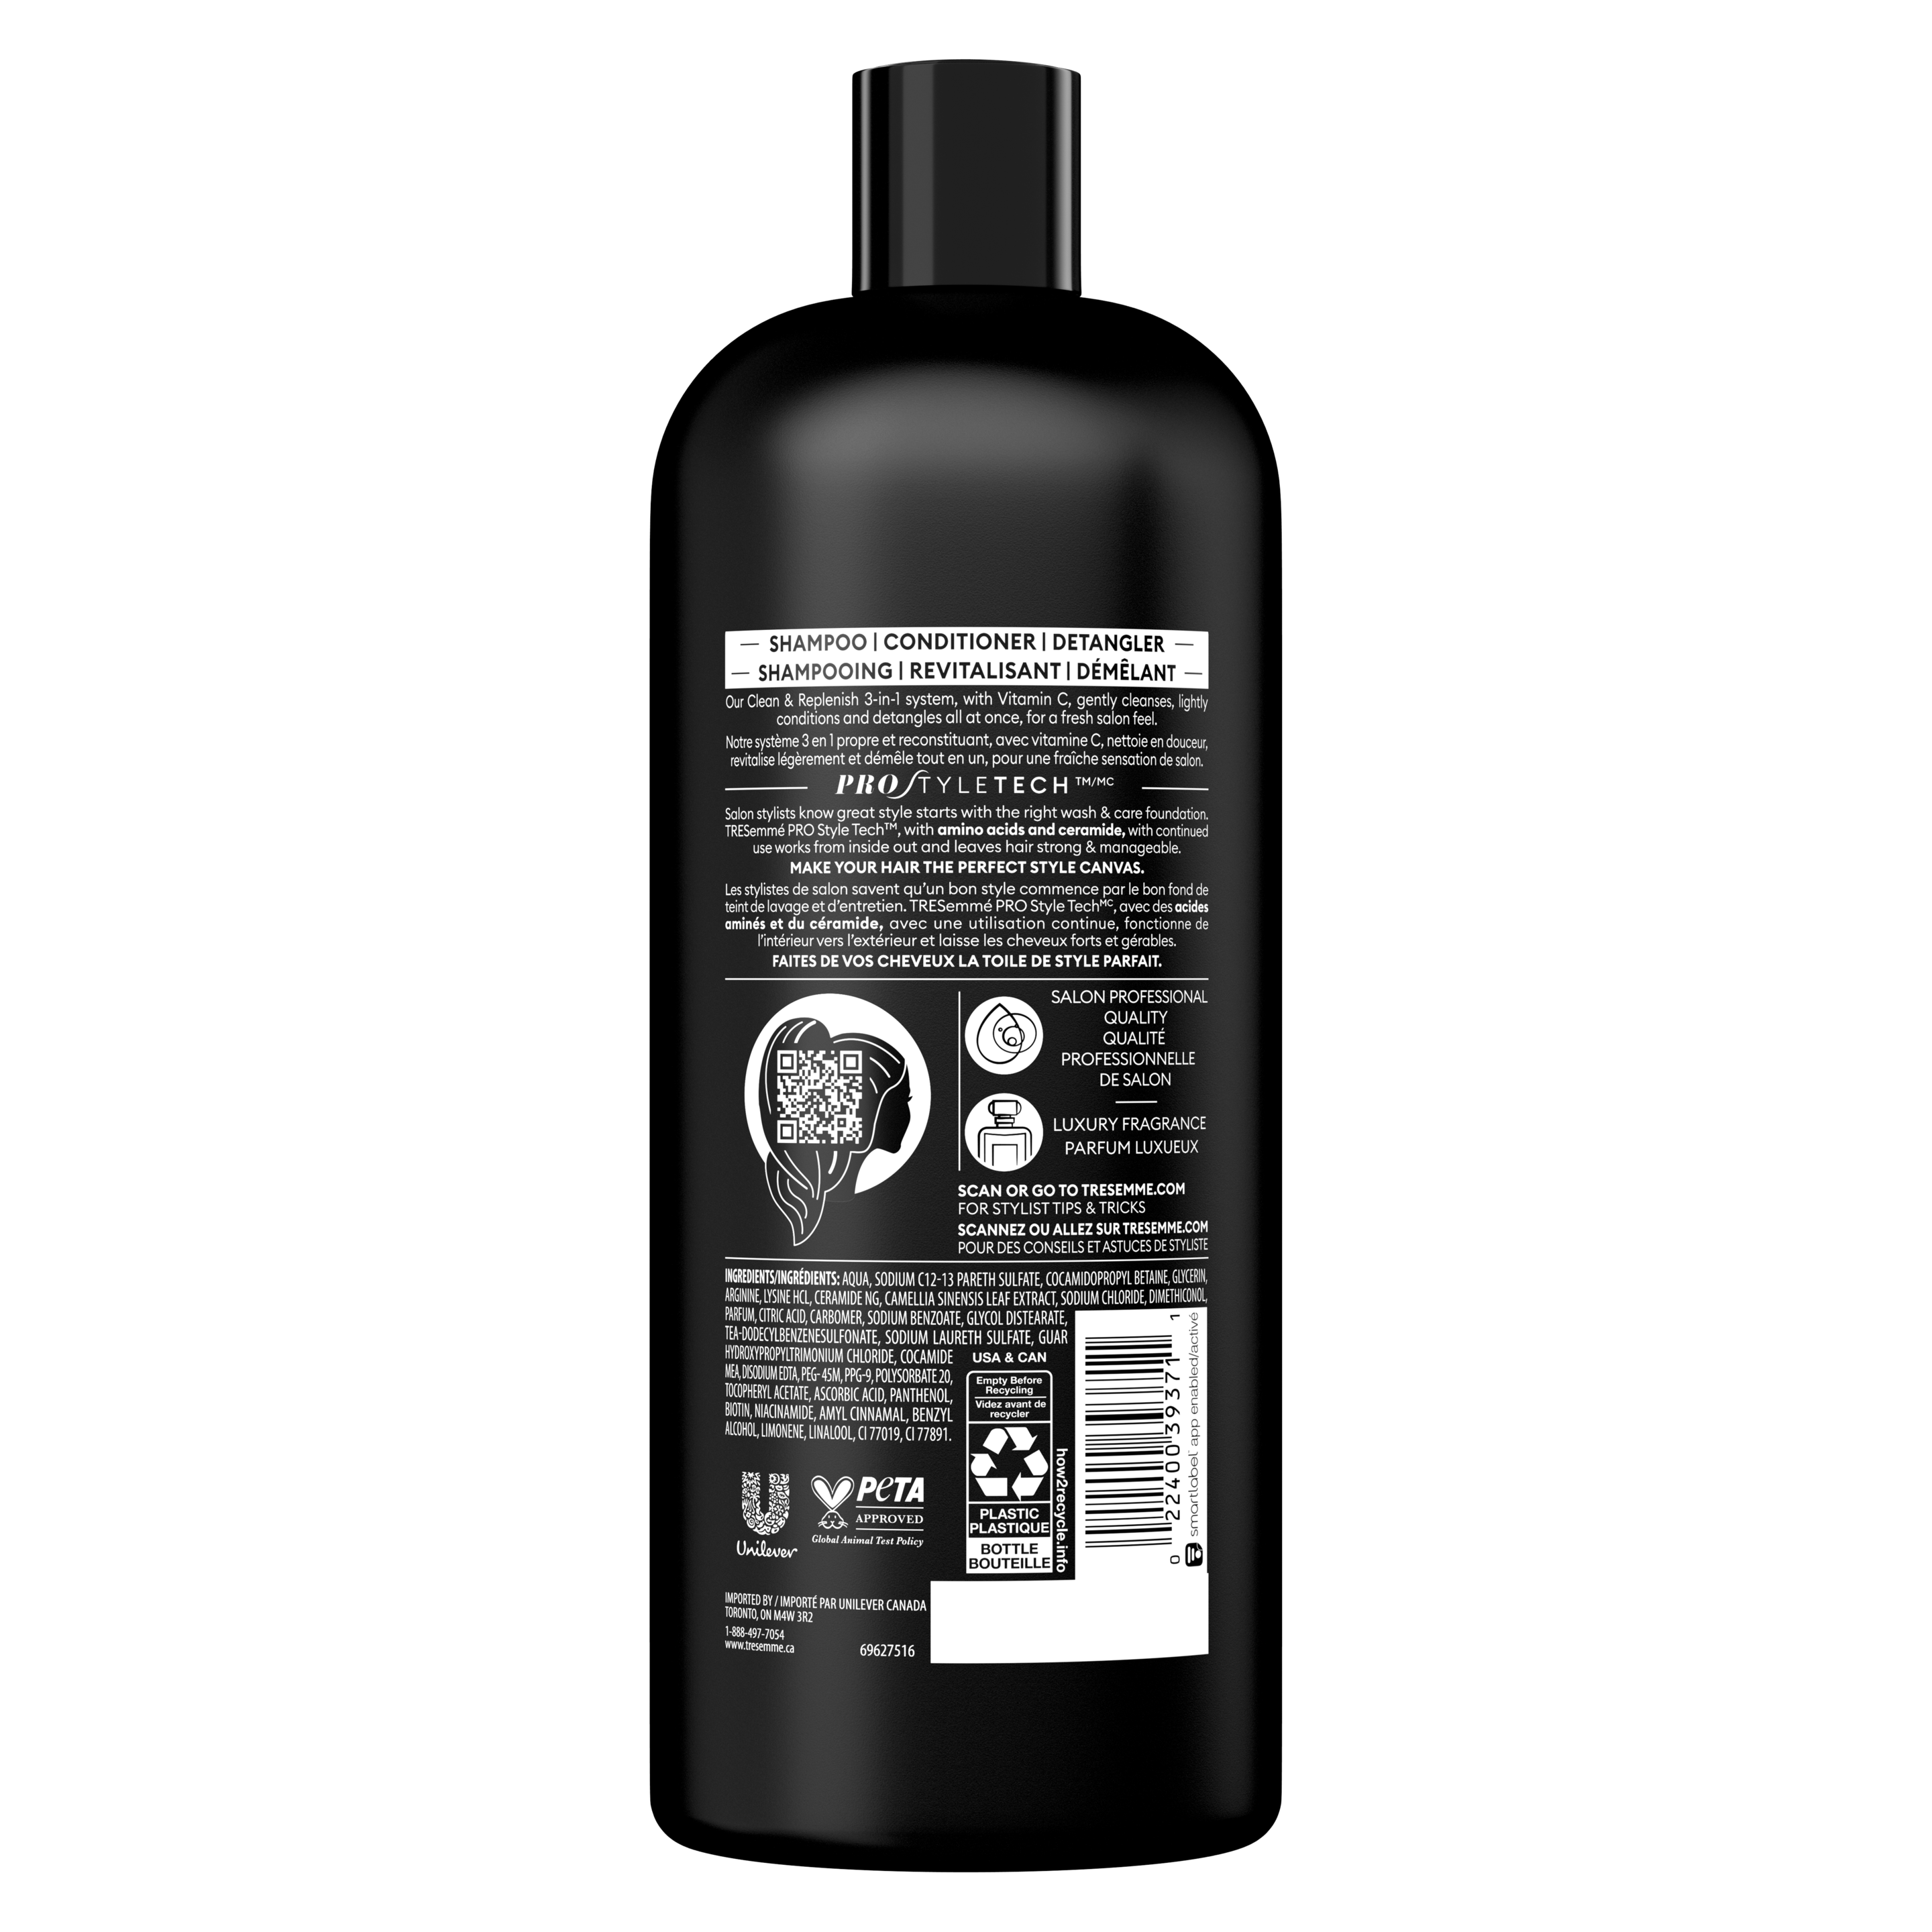 Clean & Replenish 3-in-1 Shampoo, Conditioner, Detanger